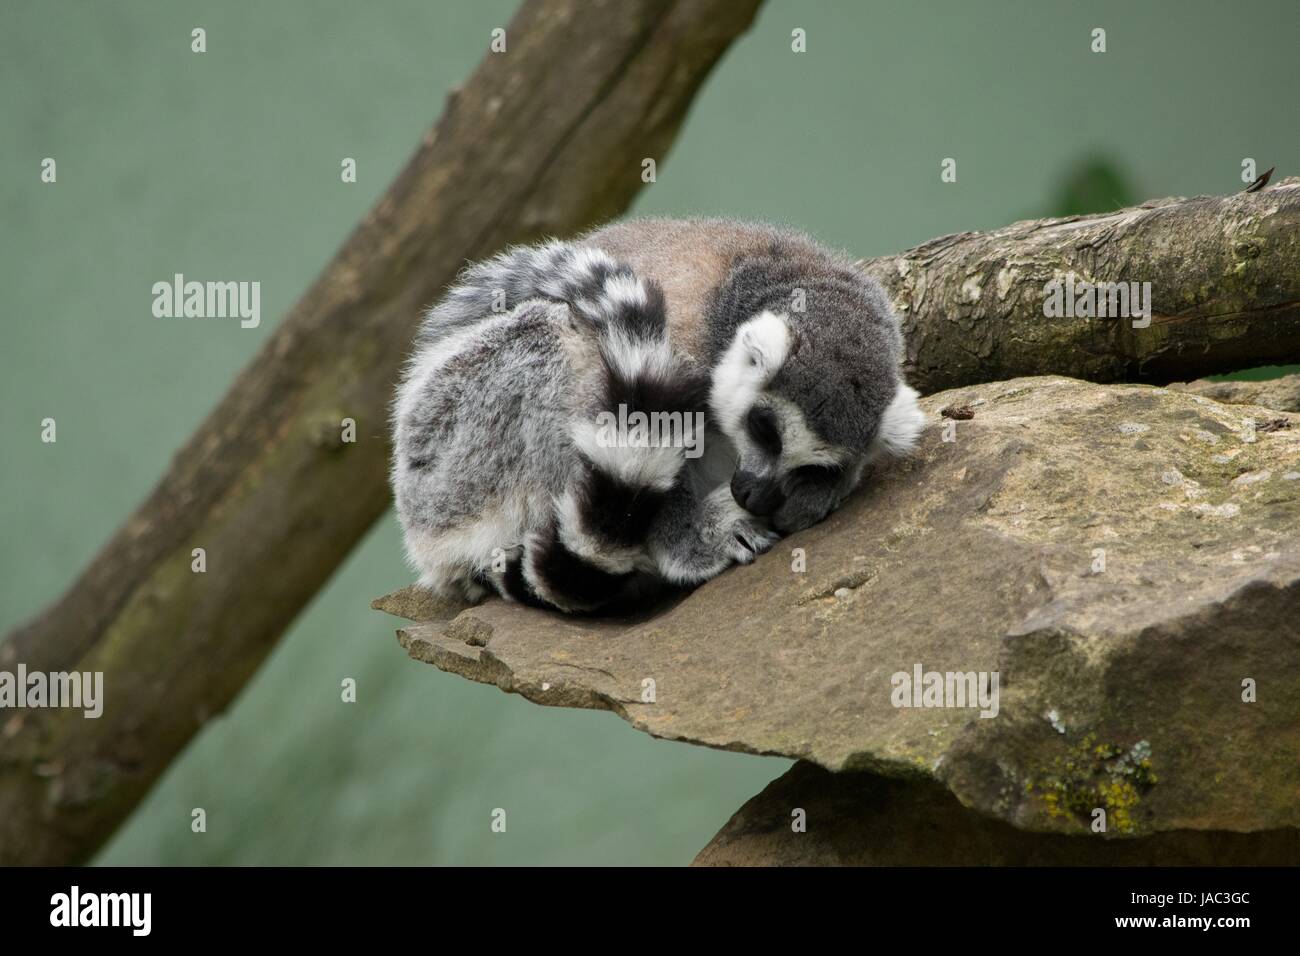 Lemure, lemur sleeping on a rock rolled in Stock Photo